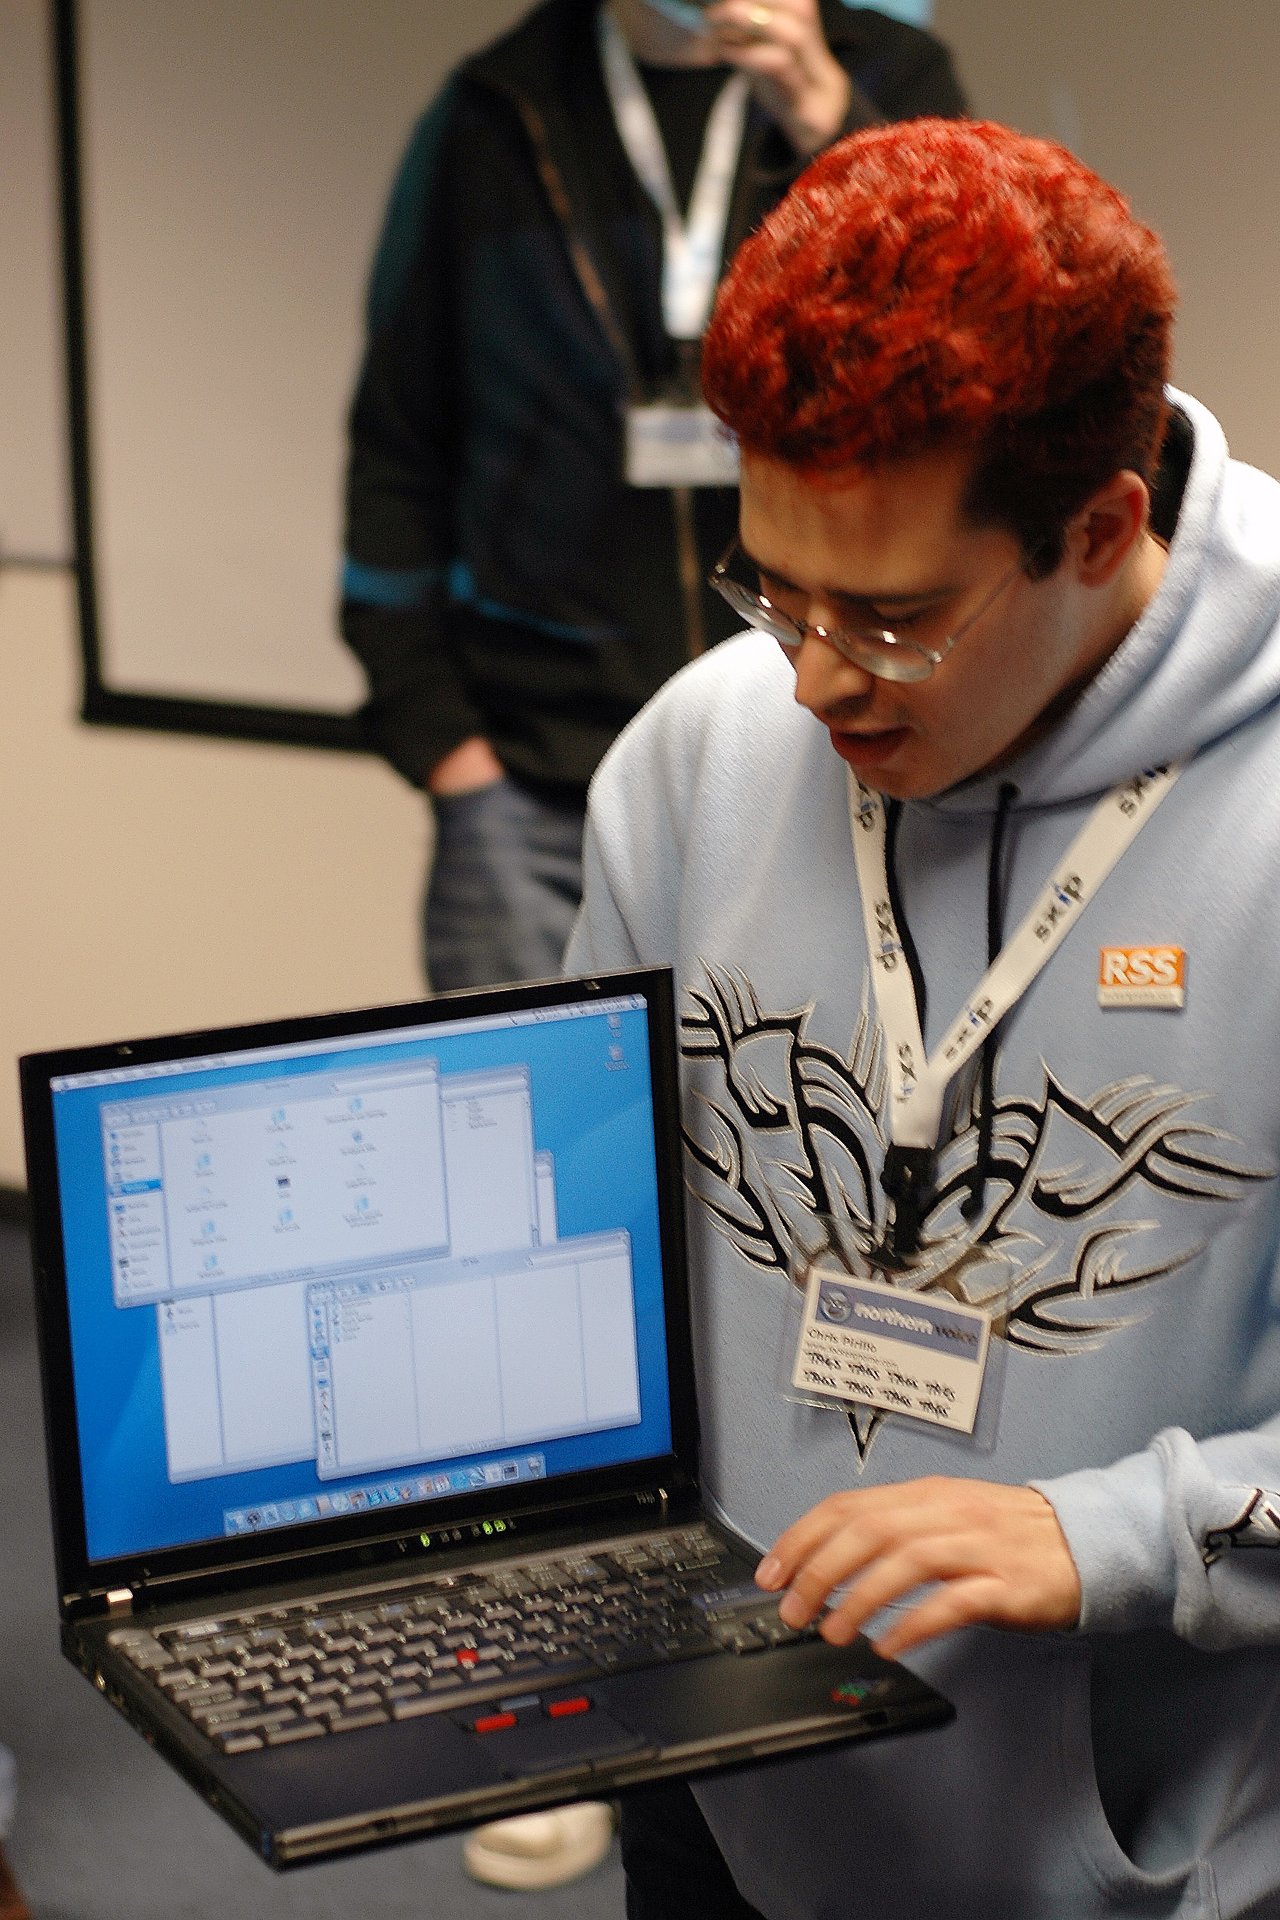 Chris Perillo showing his IBM Thinkpad running MacOS X